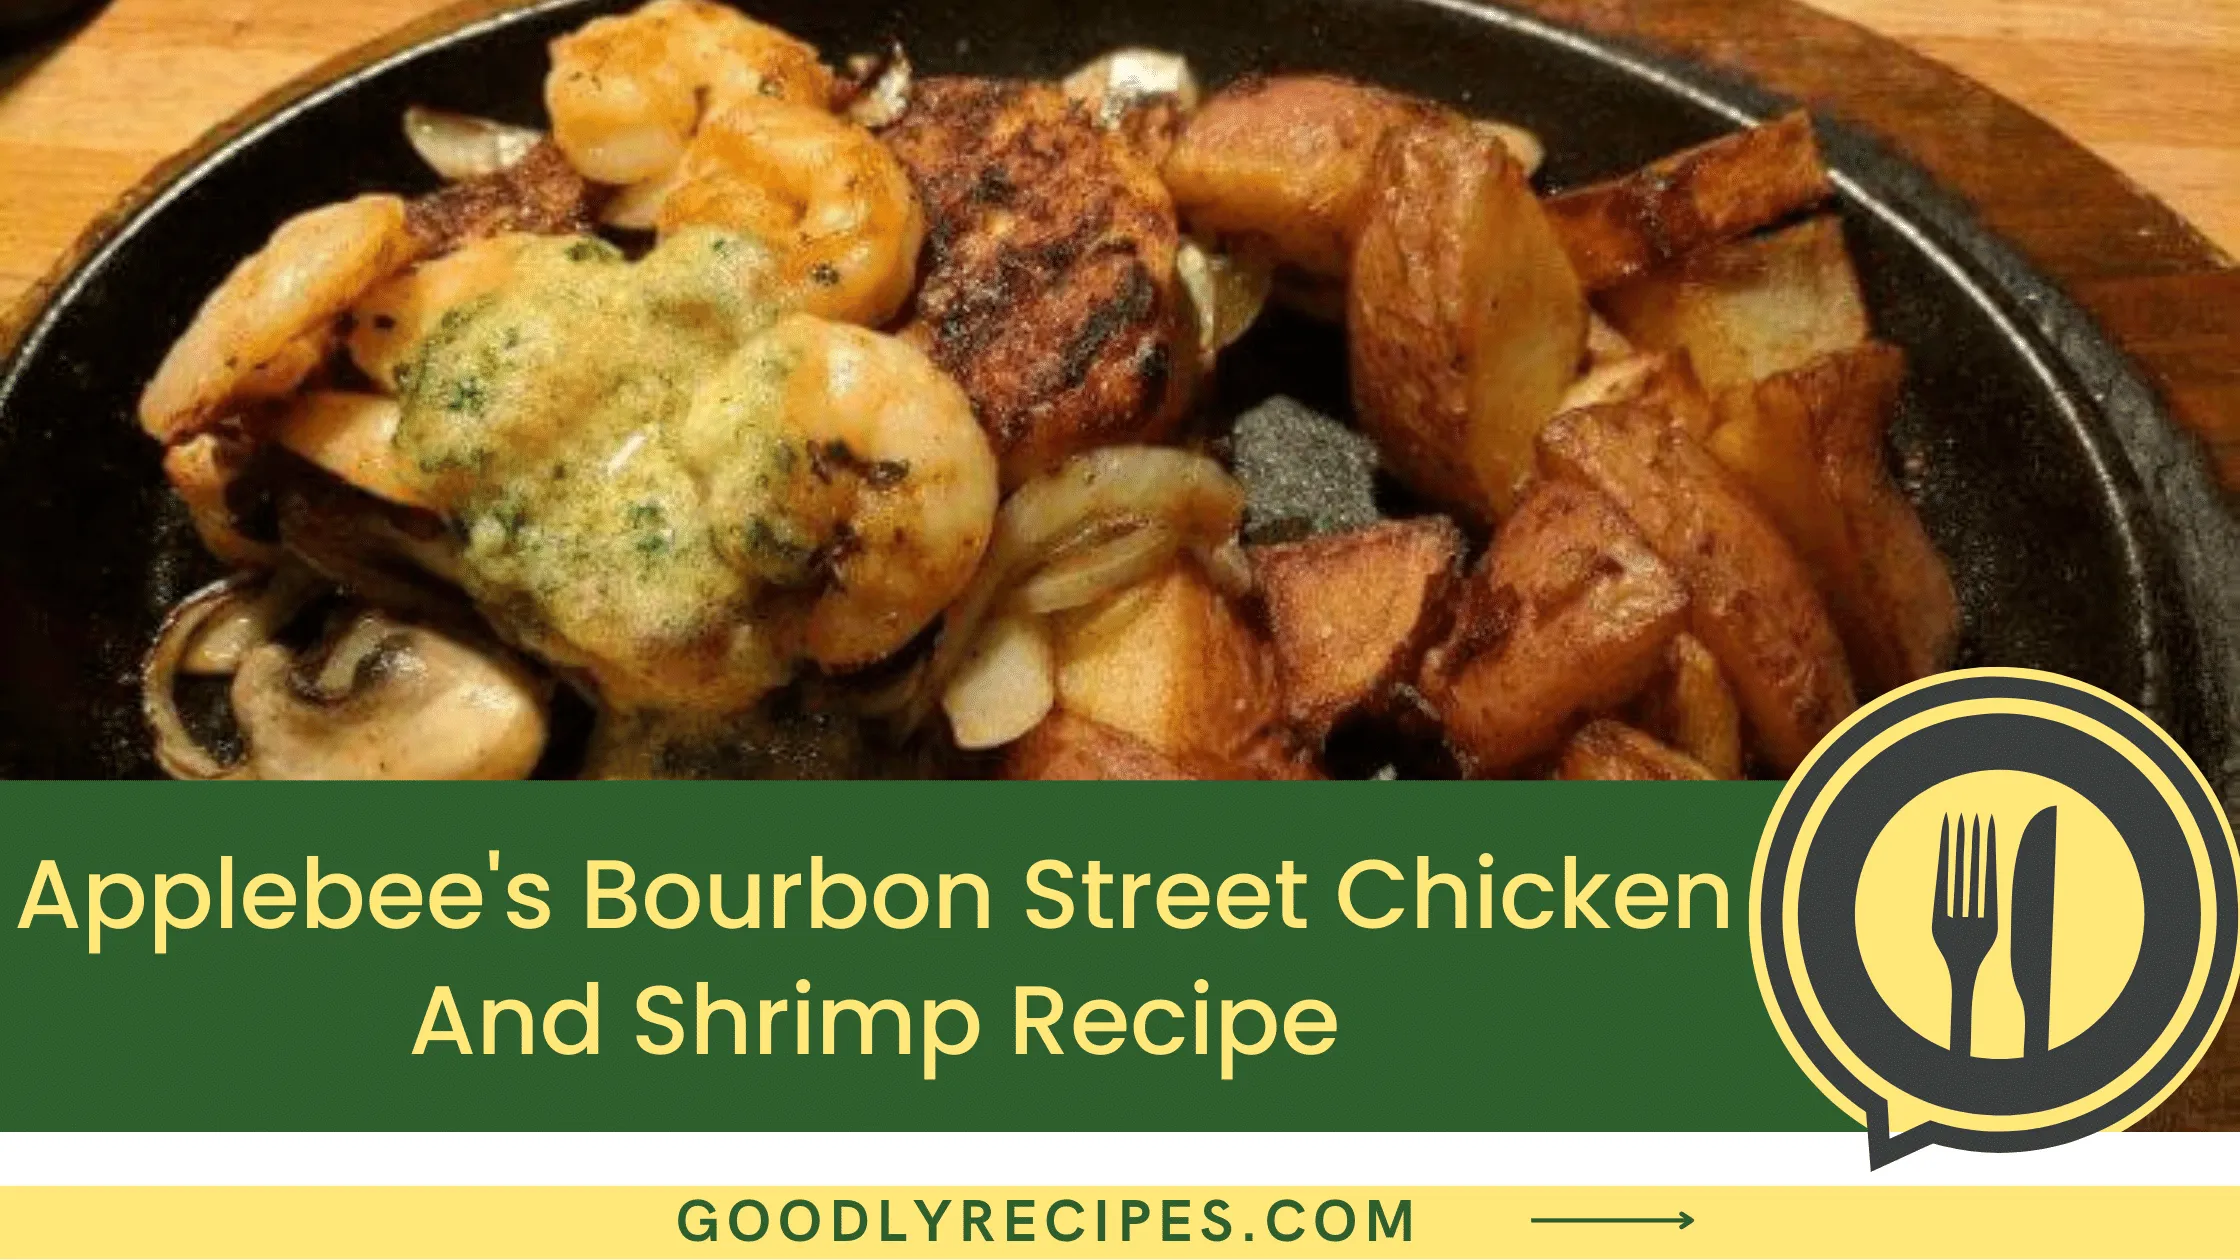 Applebee’s Bourbon Street Chicken And Shrimp Recipe - For Food Lovers